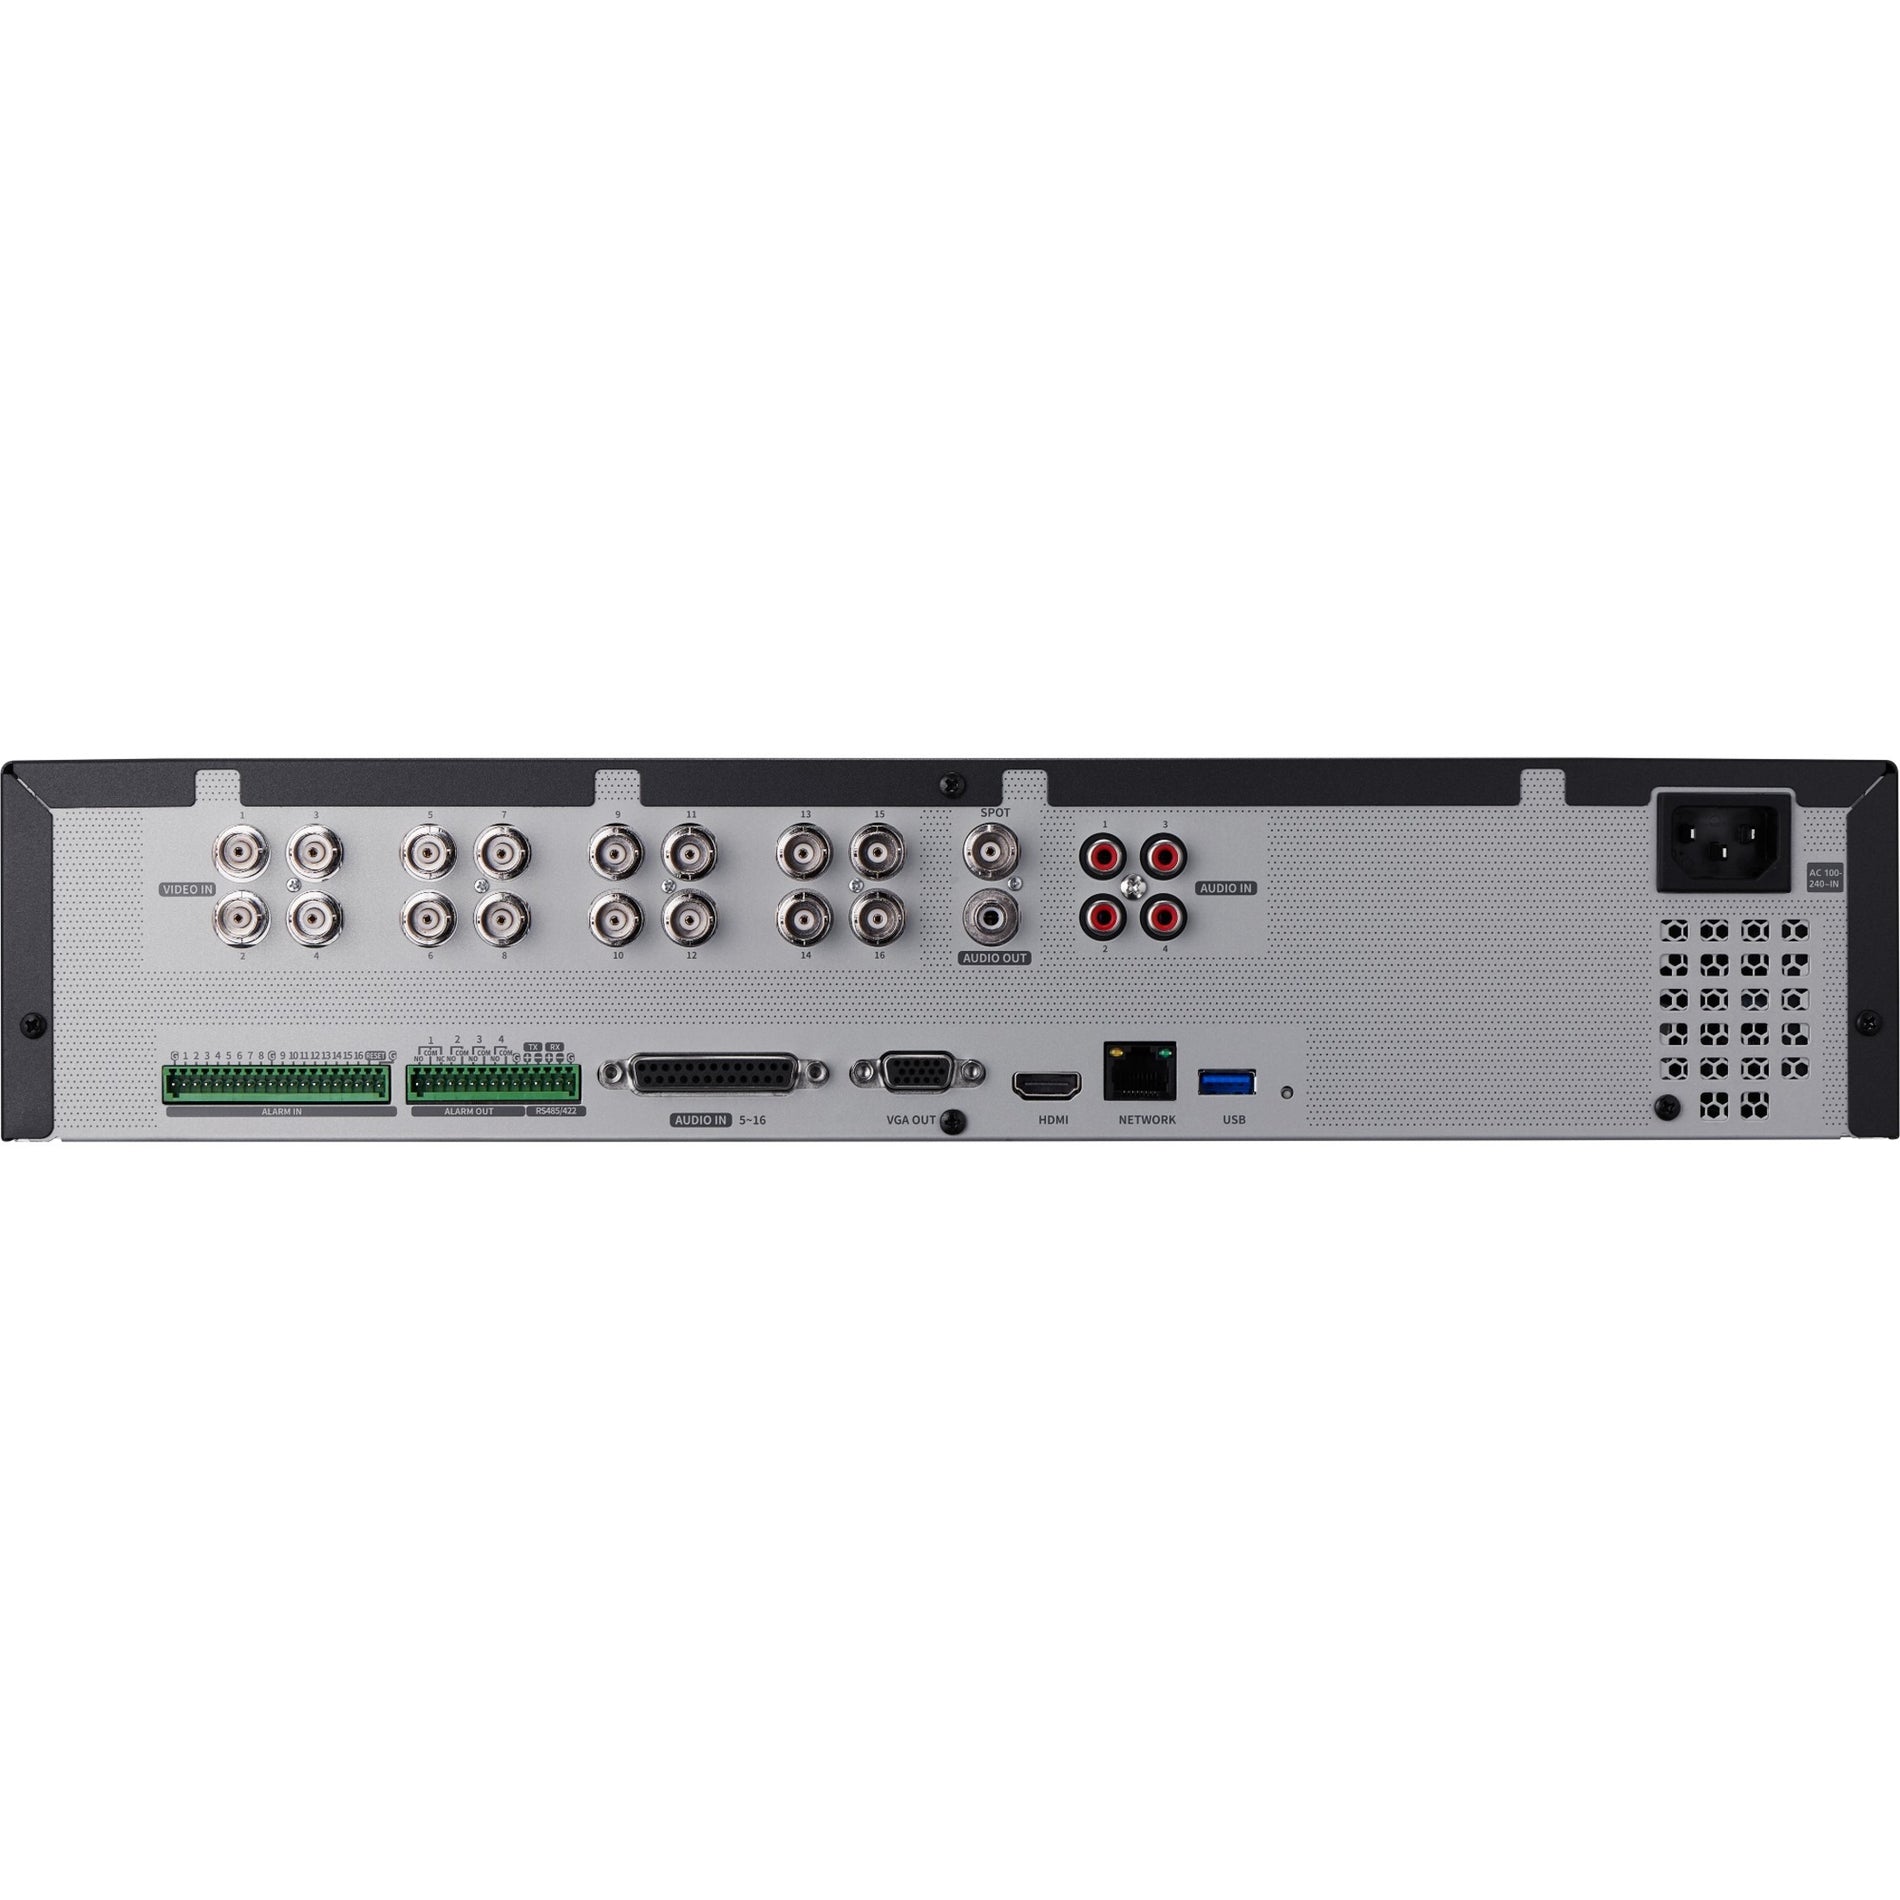 Wisenet HRX-1635 16CH Pentabrid DVR, 8MP Maximum Resolution, H.264/H.265 Video Formats, 30 fps Maximum Frame Rate